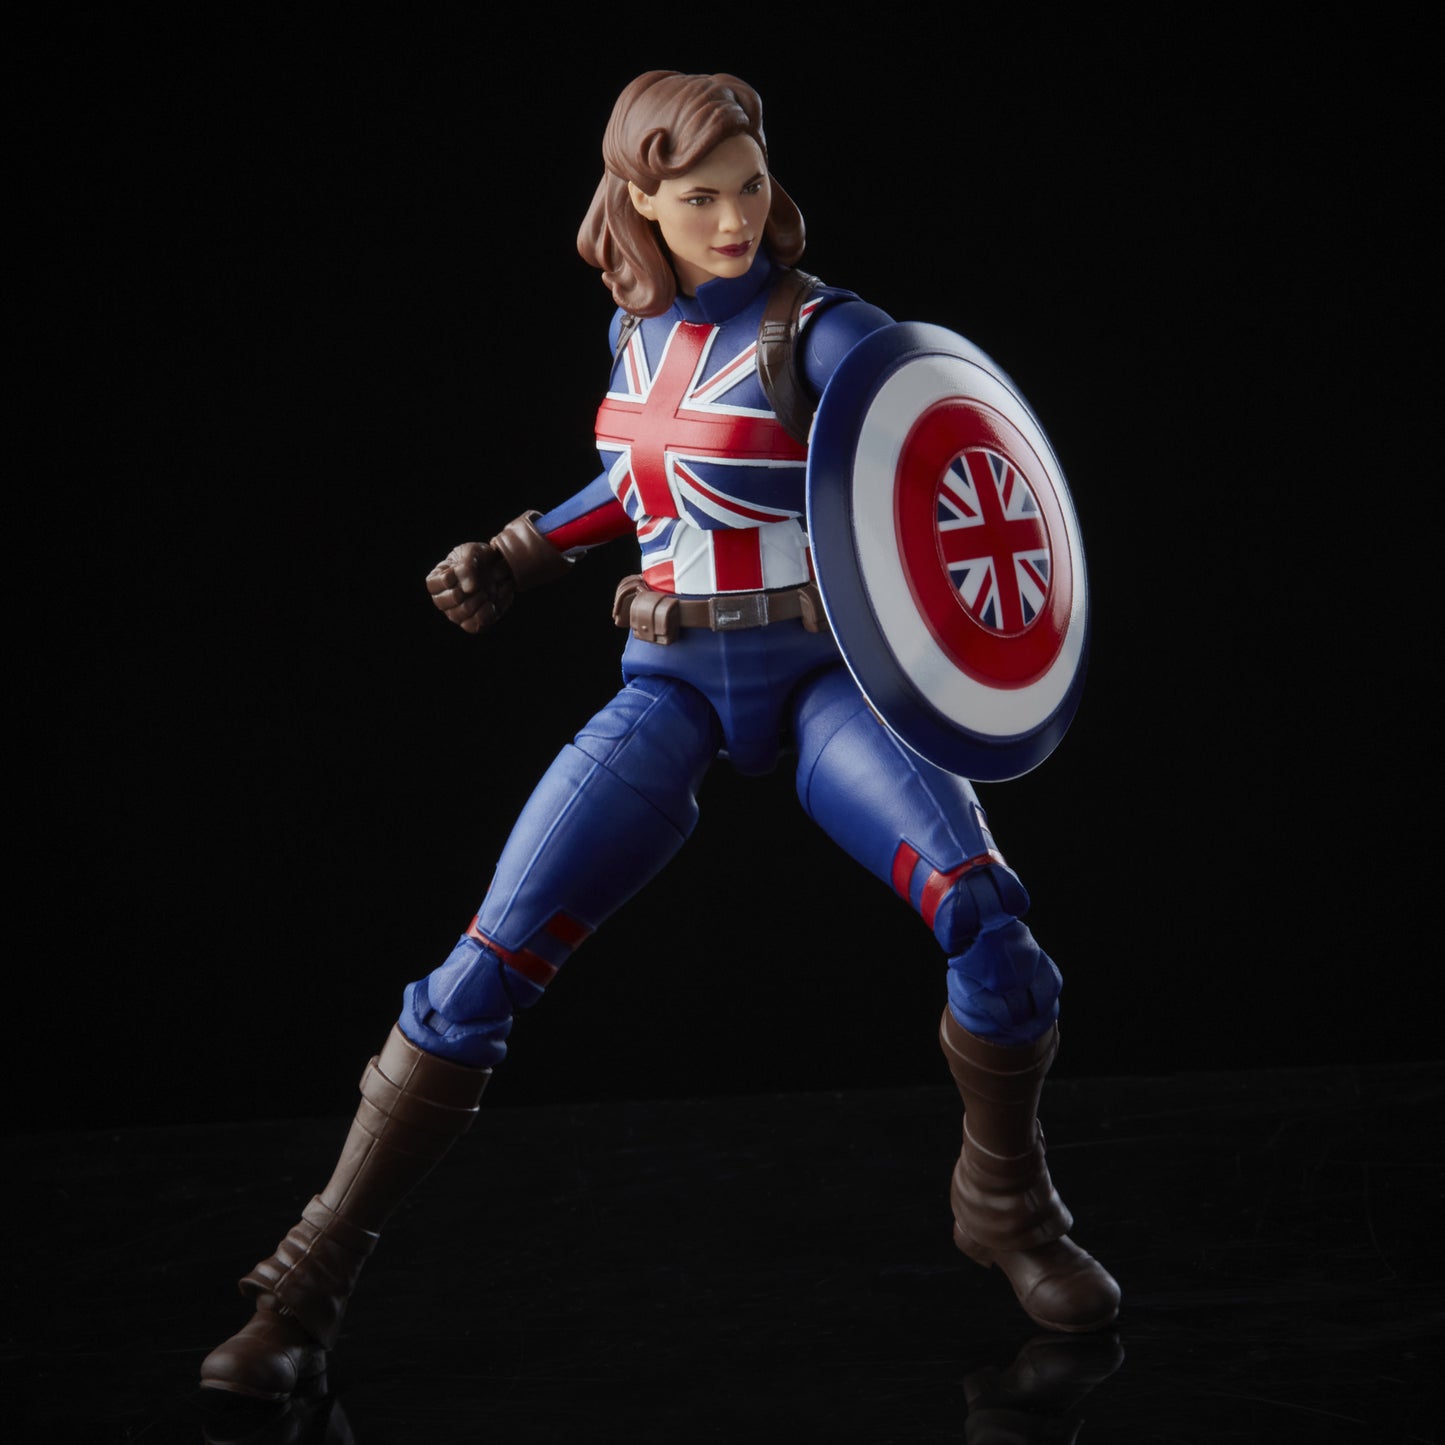 Marvel Legends Captain Carter Action Figure by Hasbro